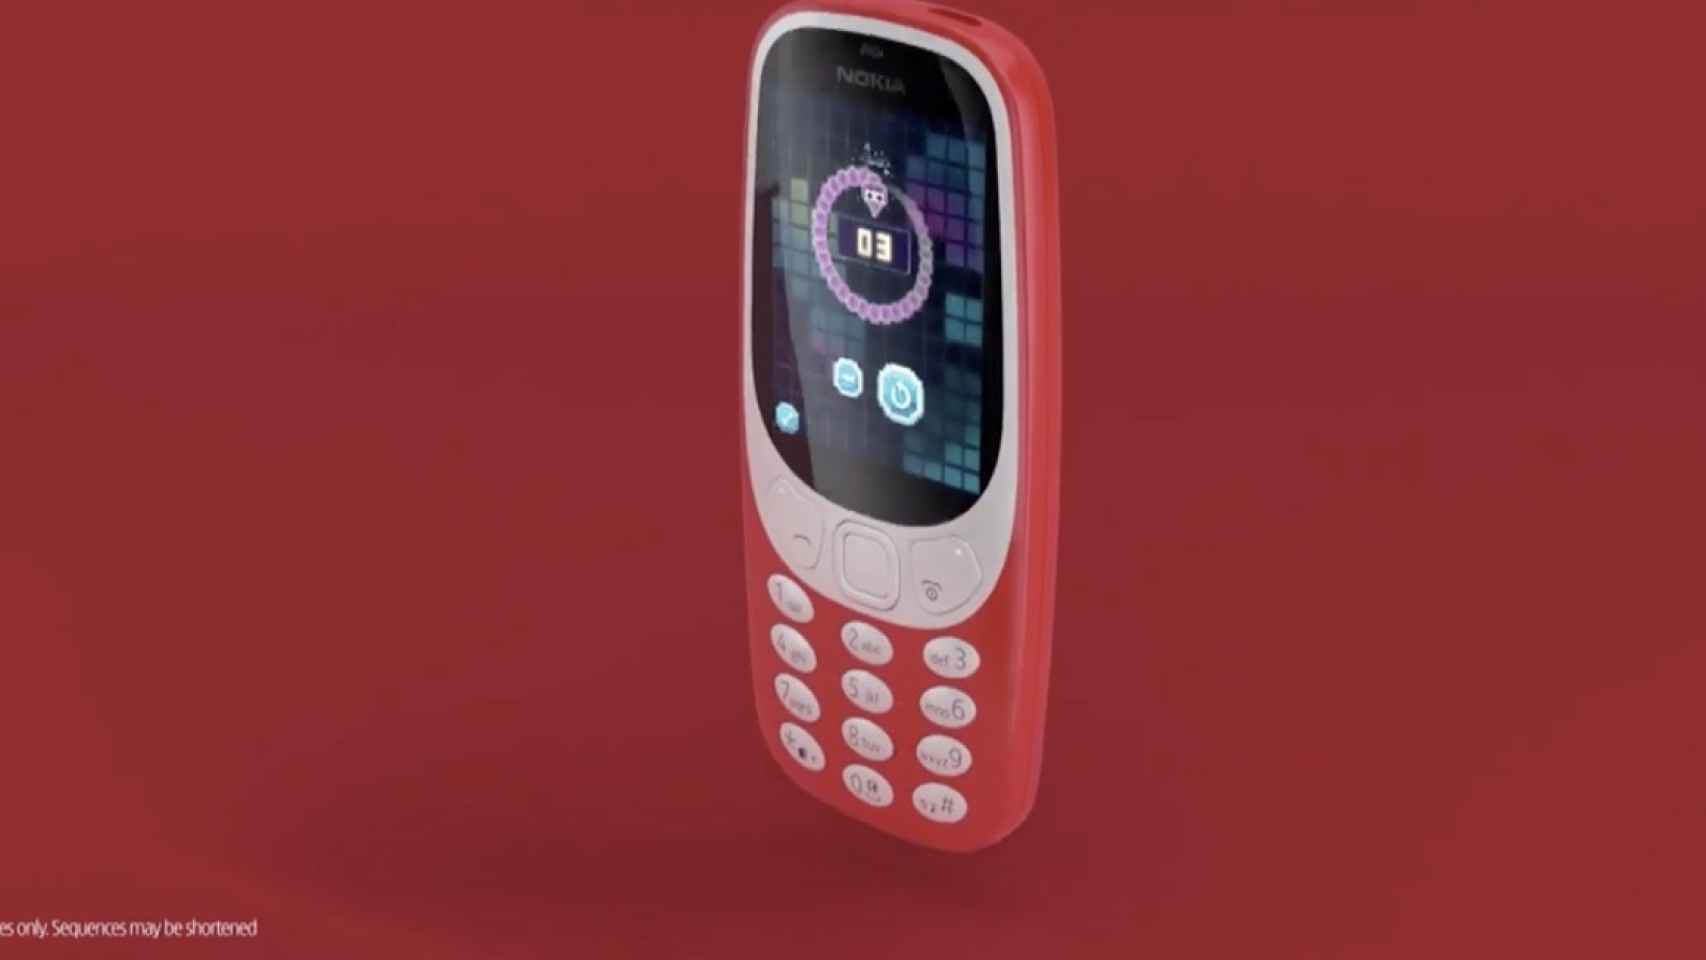 Smartphone - Nokia 3310, 32 MB+32 MB, Azul